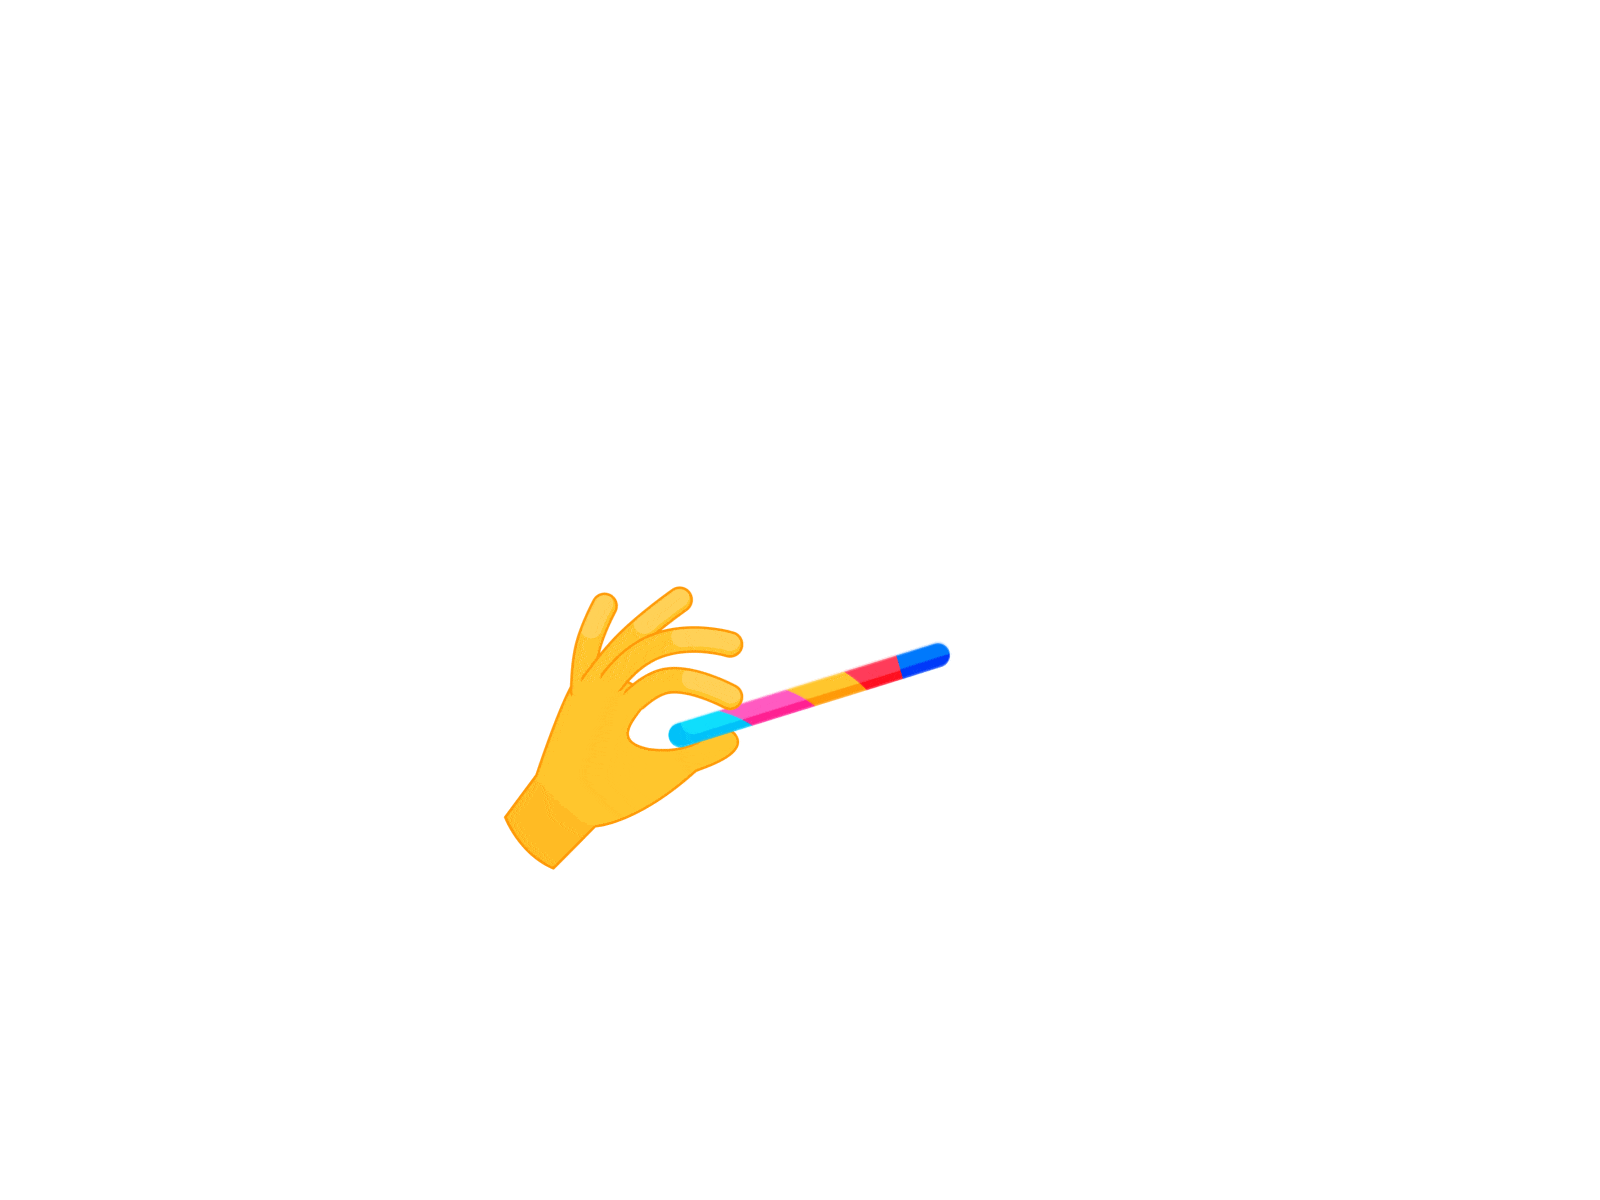 Magic hand